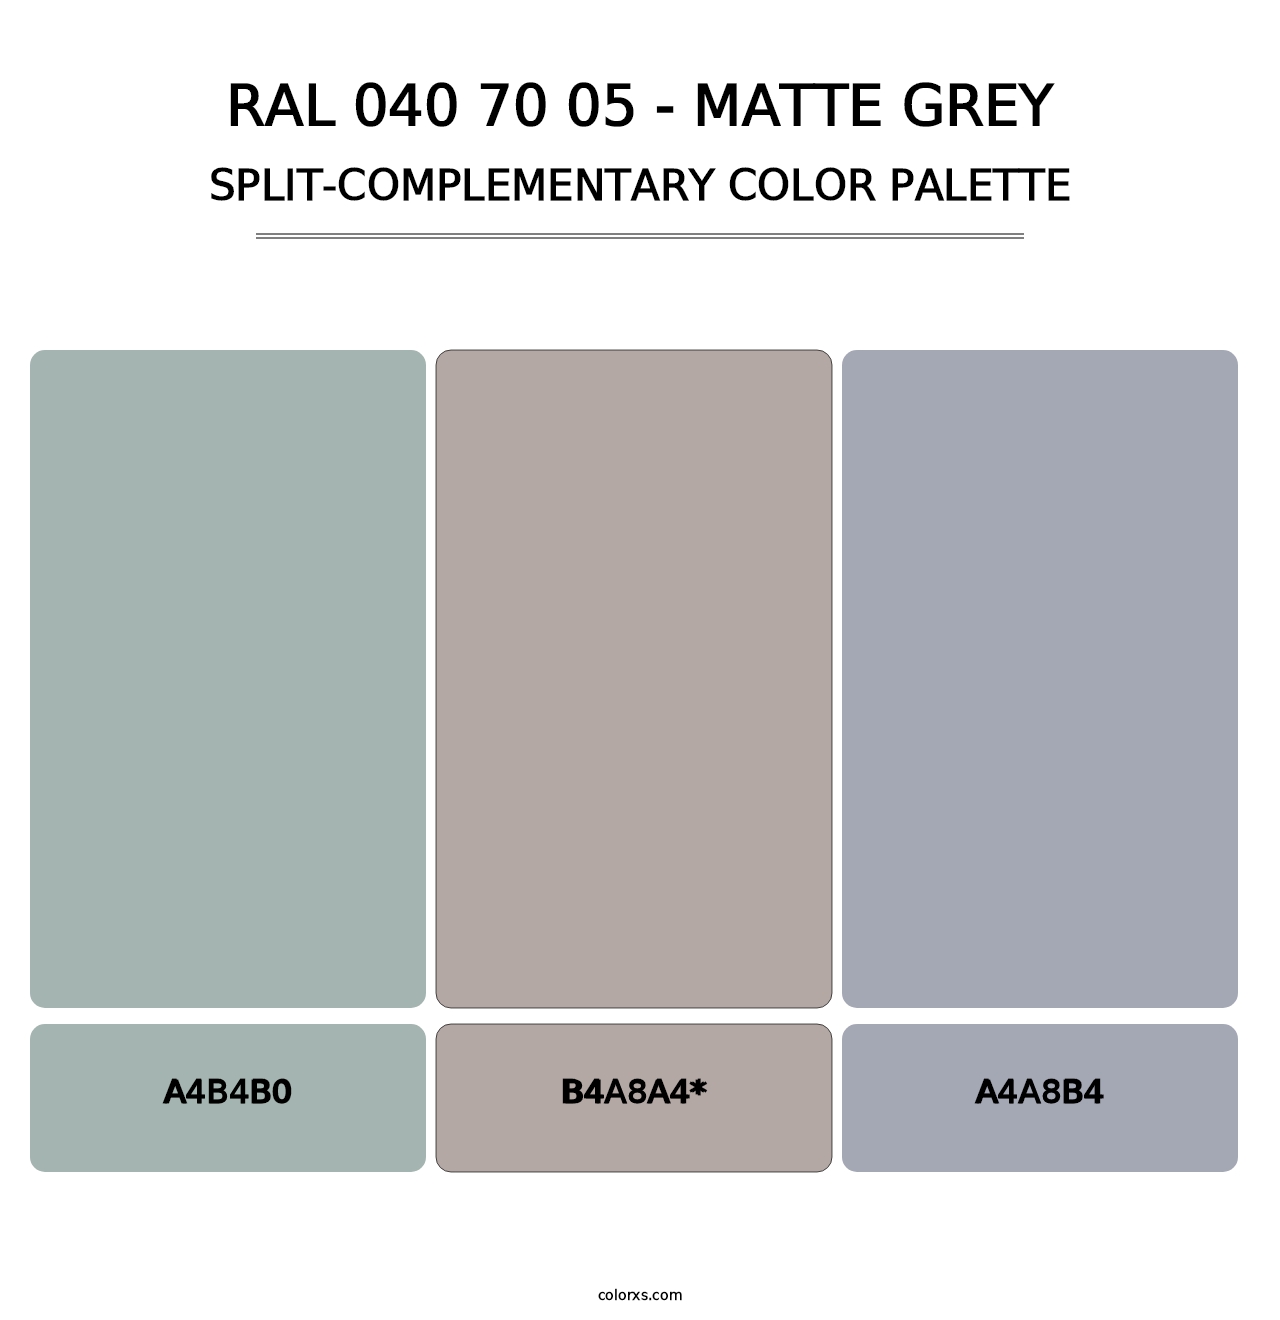 RAL 040 70 05 - Matte Grey - Split-Complementary Color Palette